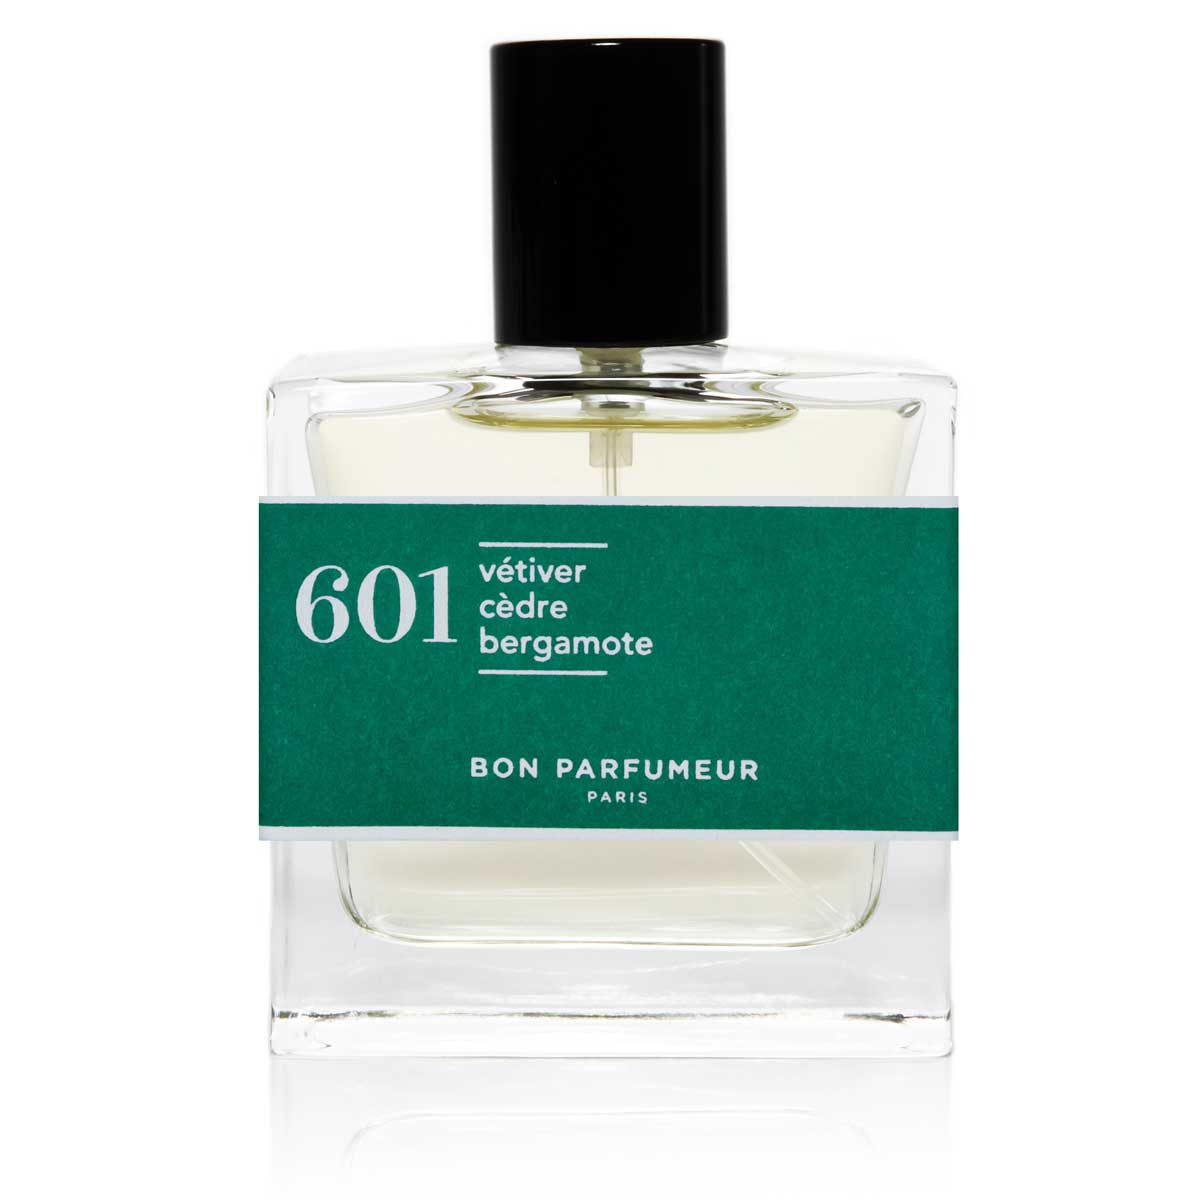 Bon Parfumeur 601 Vetiver Cedar Bergamot Eau De Parfum 30Ml